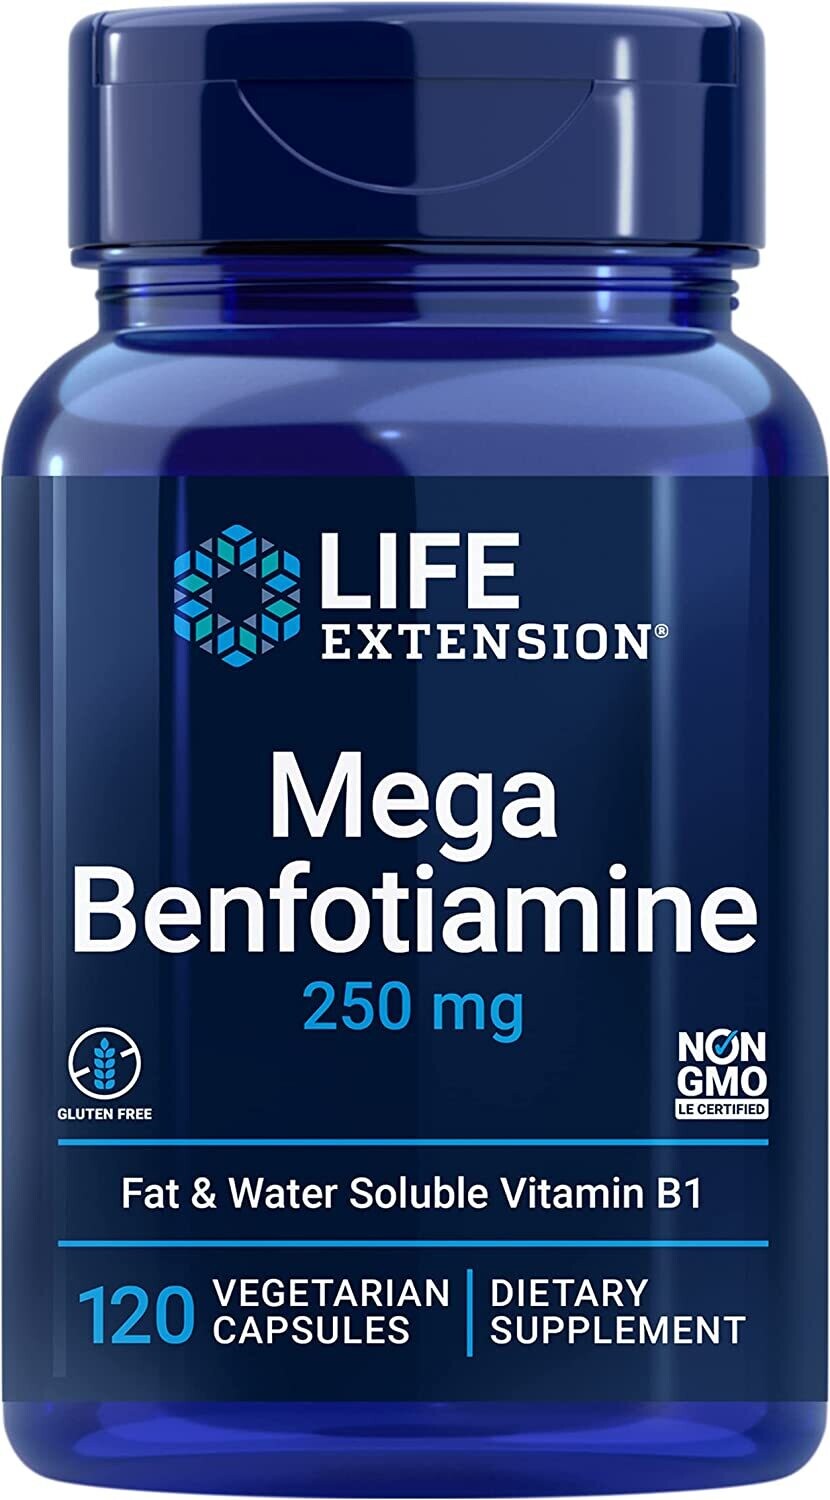 Life Extension Mega Benfotiamine